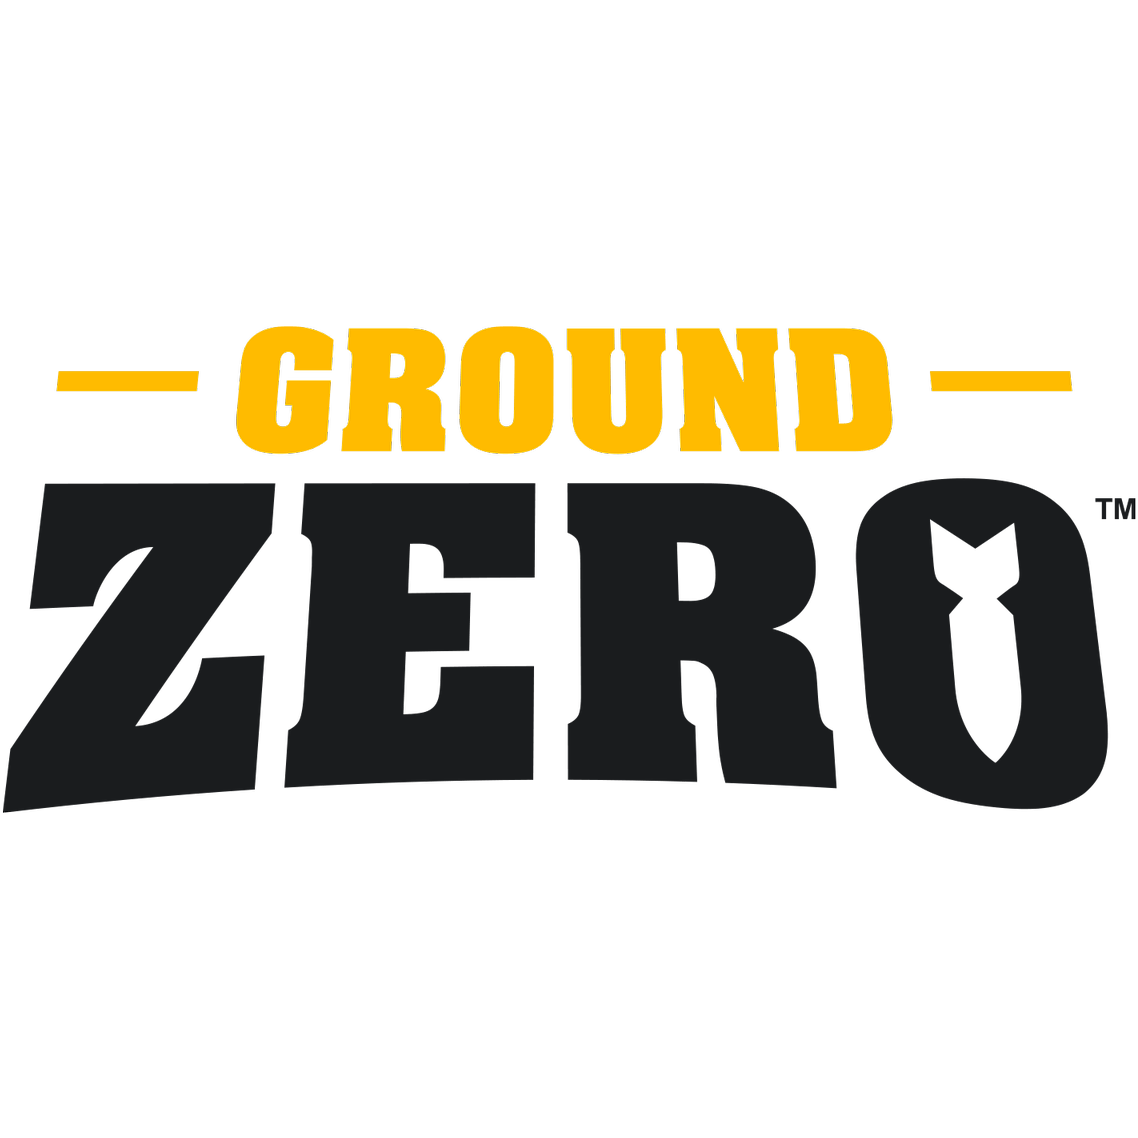 GameBattles Logo - Ground Zero (2017 Team)logo square.png of Duty Esports